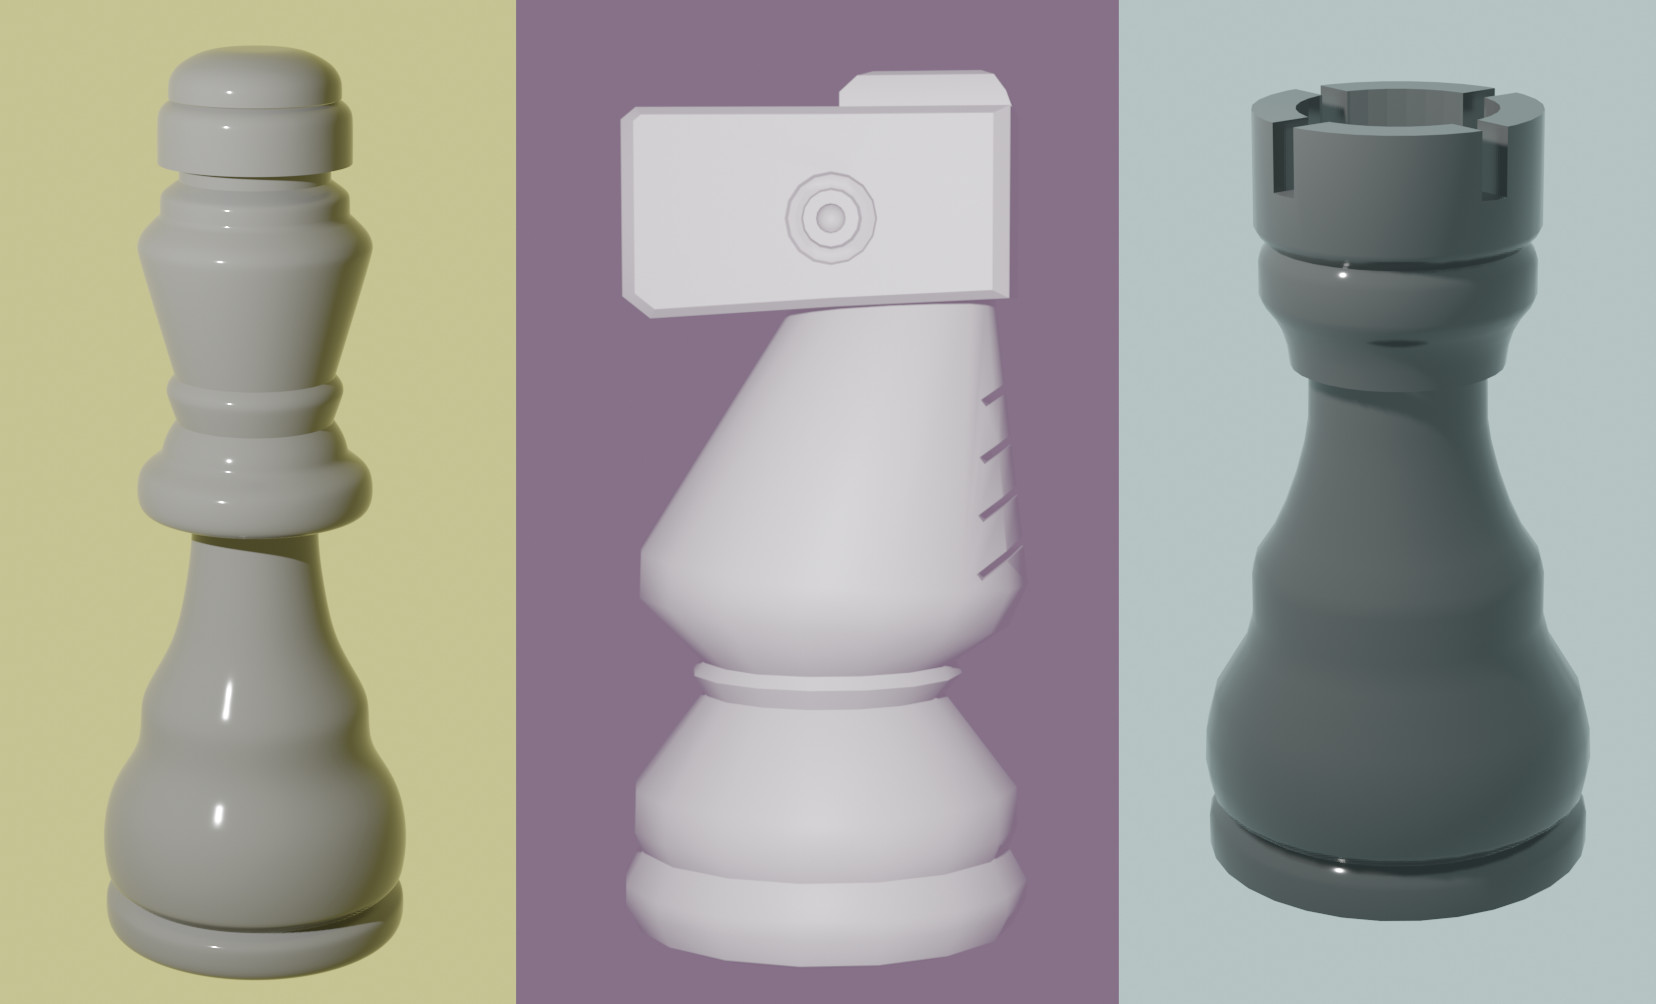 Custom chess set modeled in Blender - Finished Projects - Blender Artists  Community